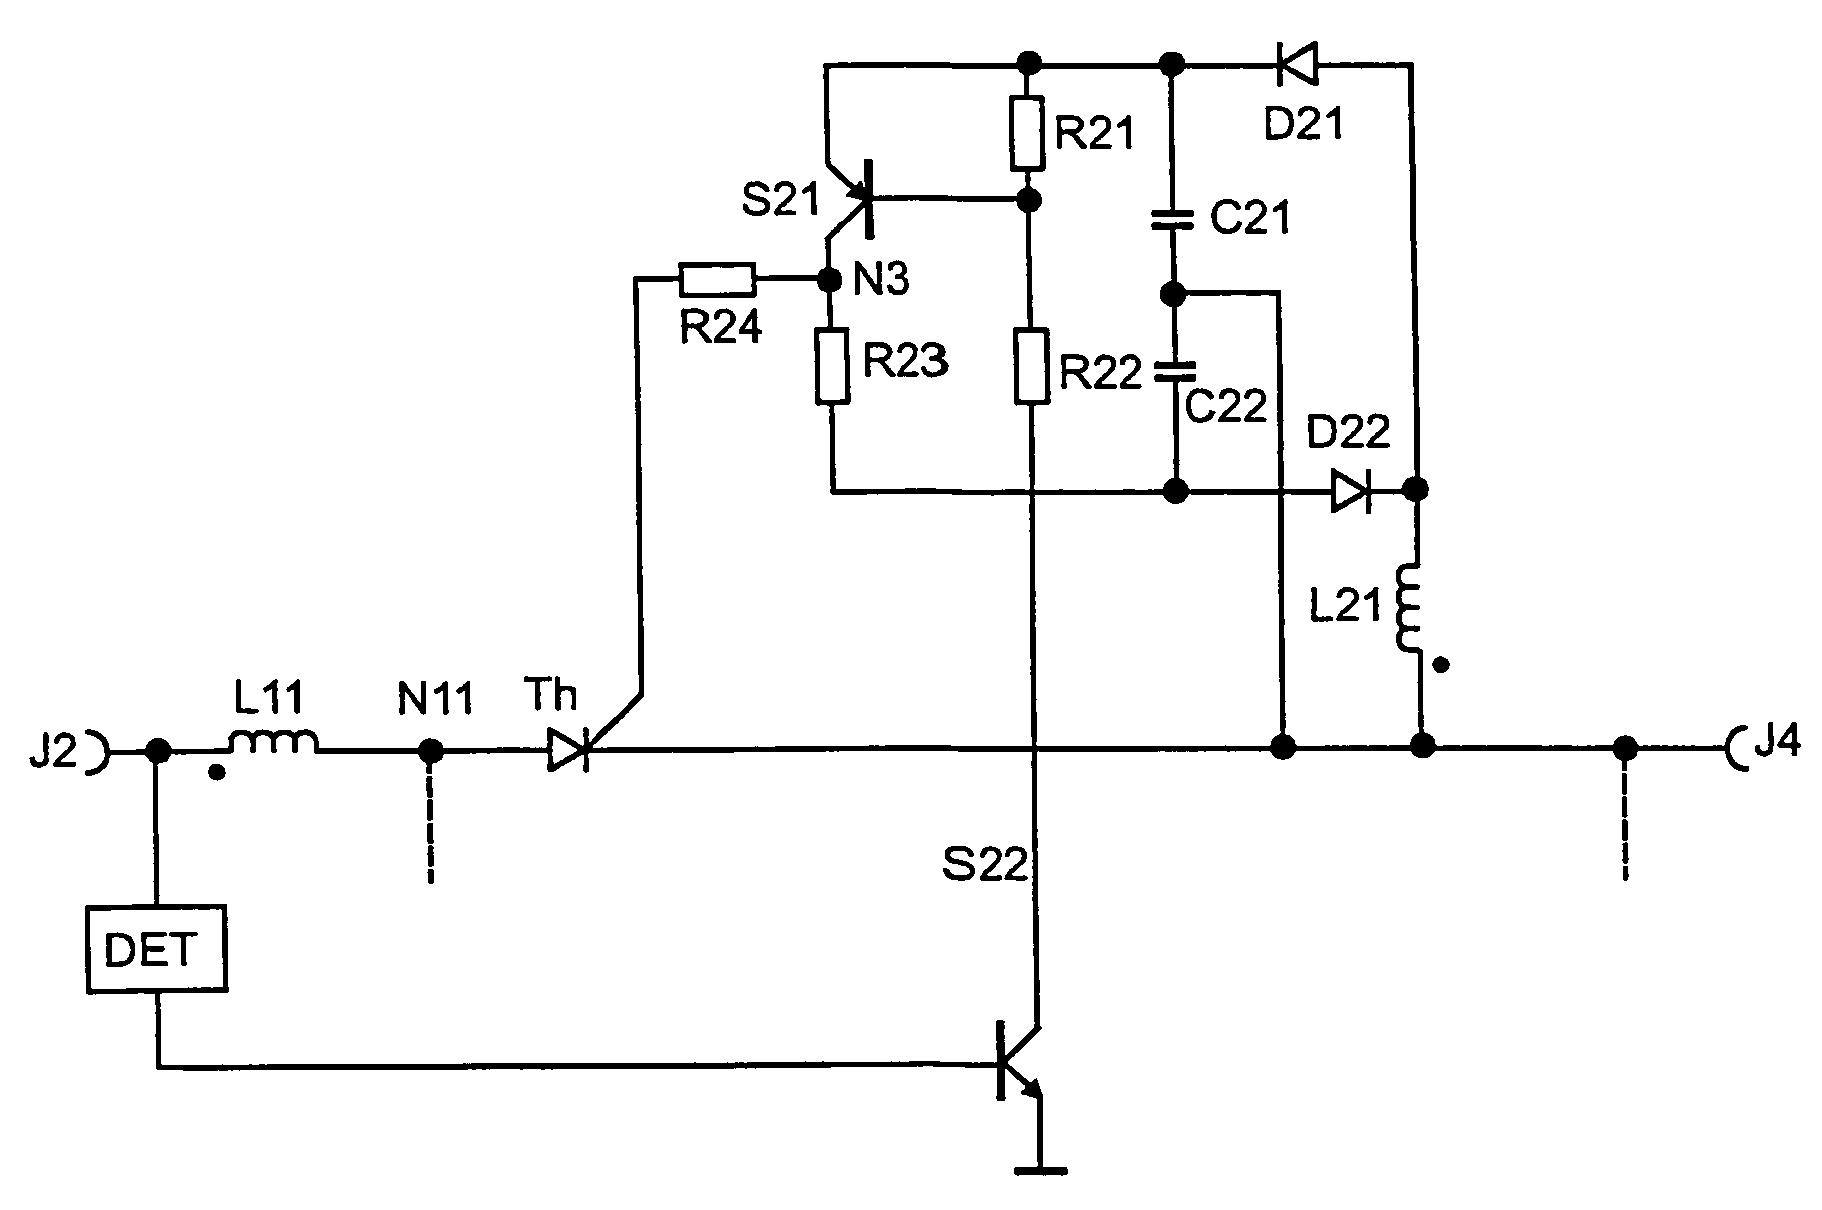 Circuit arrangement for providing a DC operating voltage